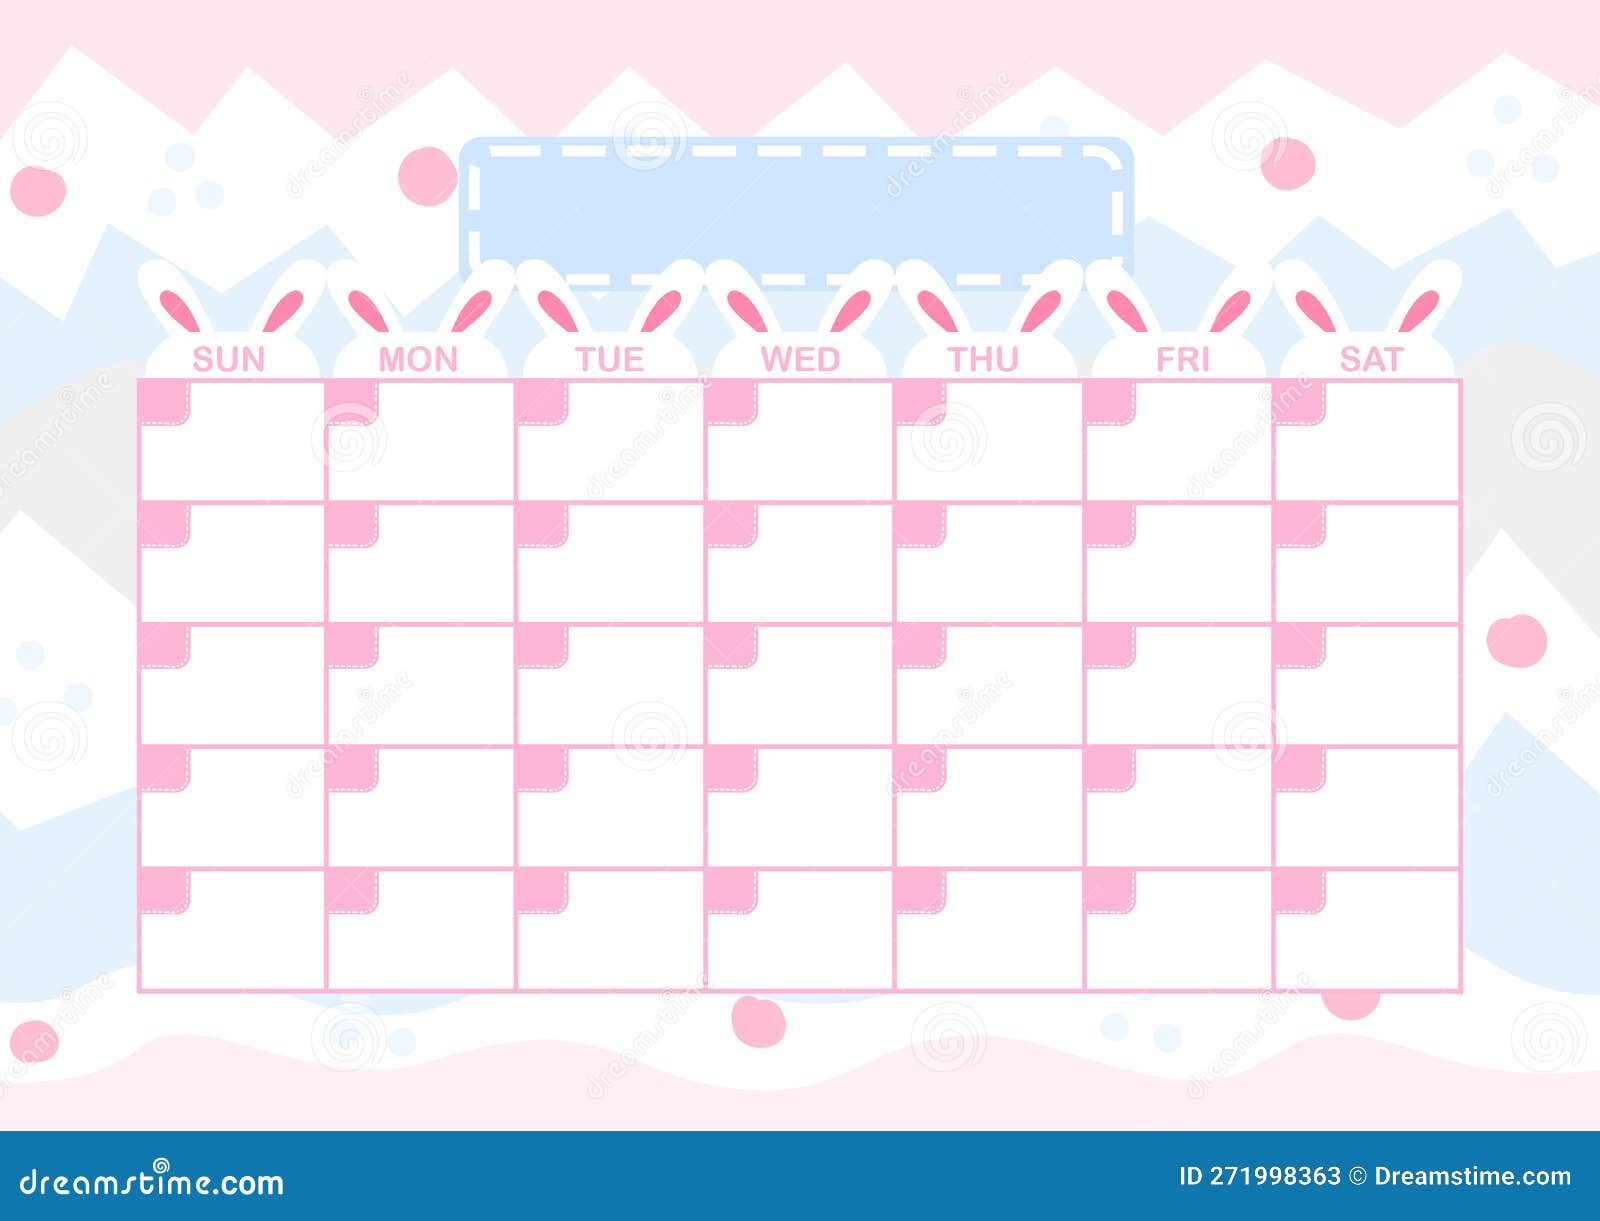 Blank Monthly Calendar Geometric Pastel Rabbit Bunny Theme Stock